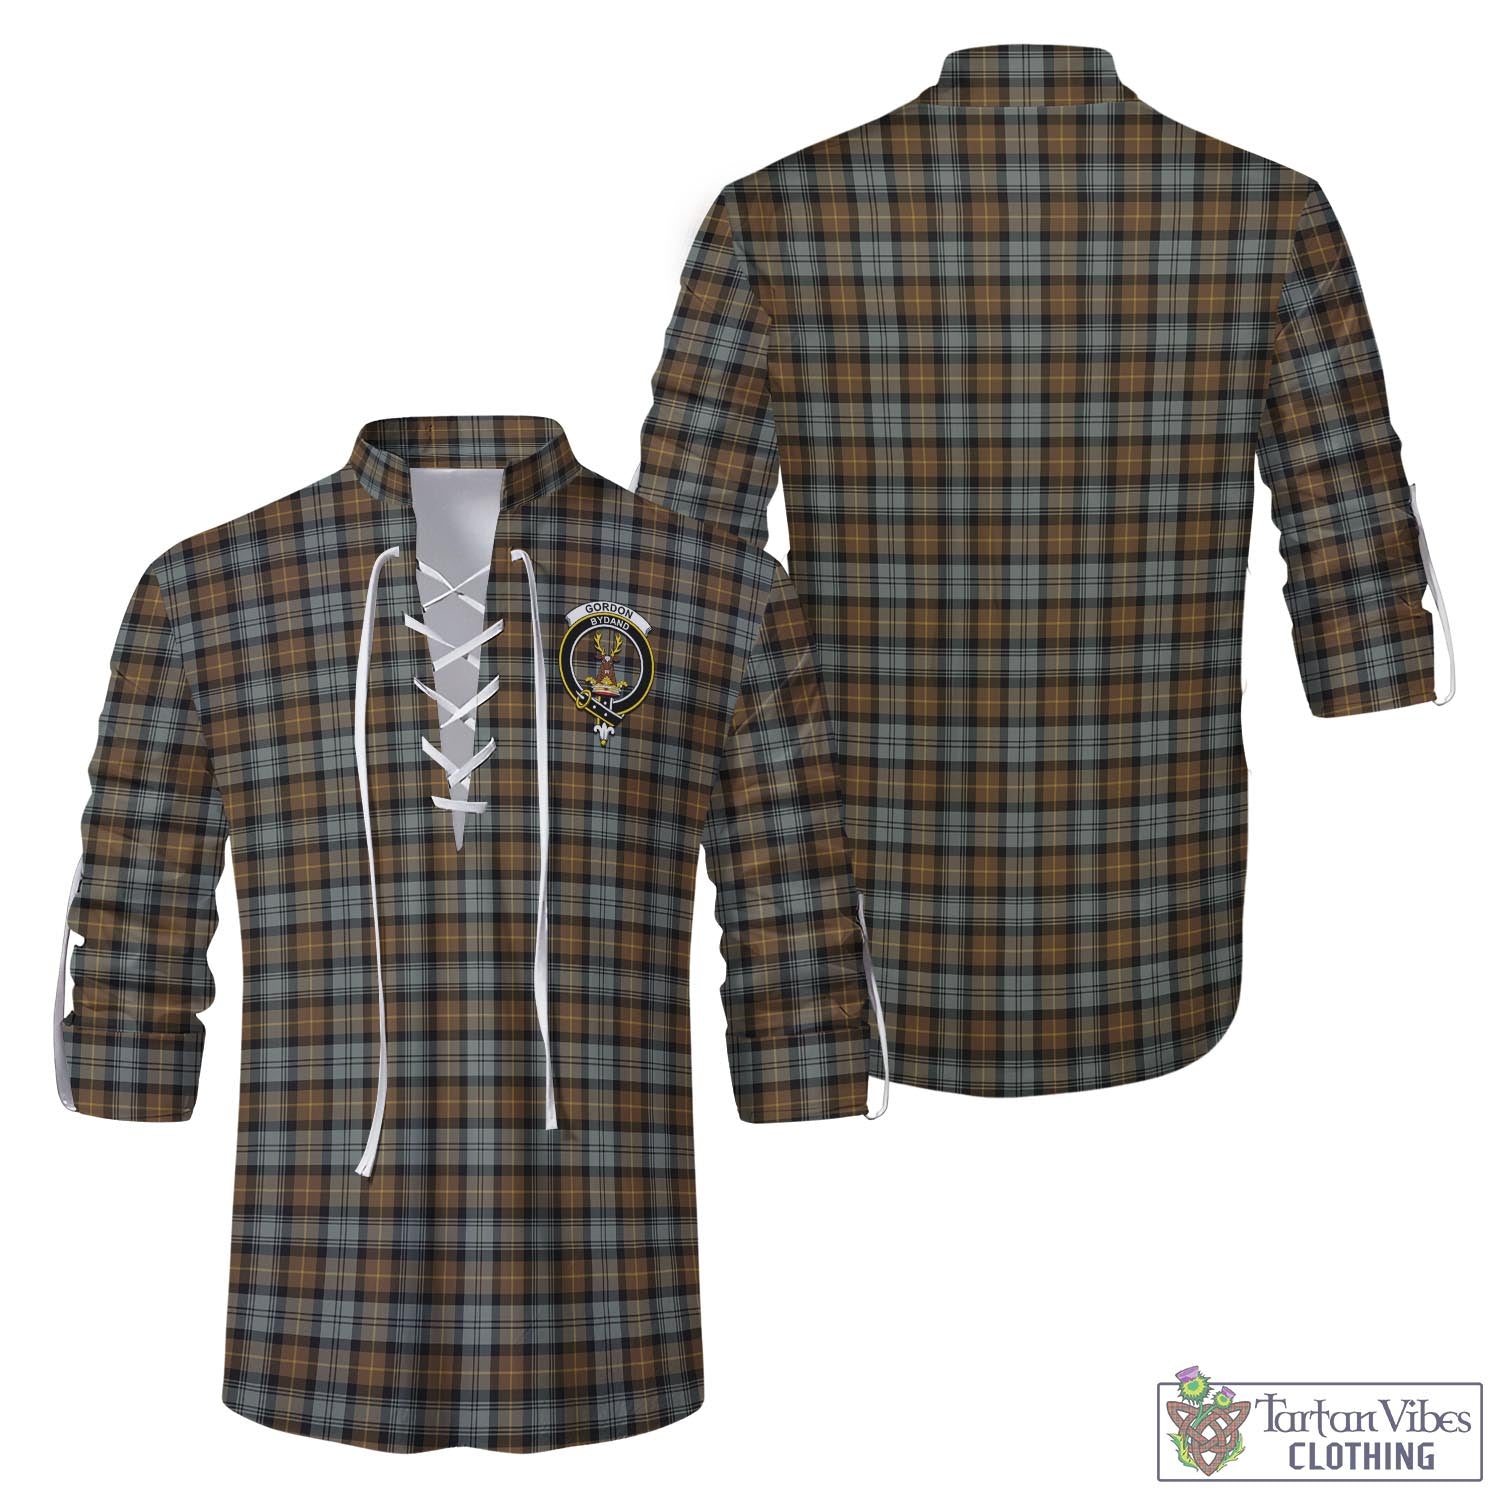 Tartan Vibes Clothing Gordon Weathered Tartan Men's Scottish Traditional Jacobite Ghillie Kilt Shirt with Family Crest